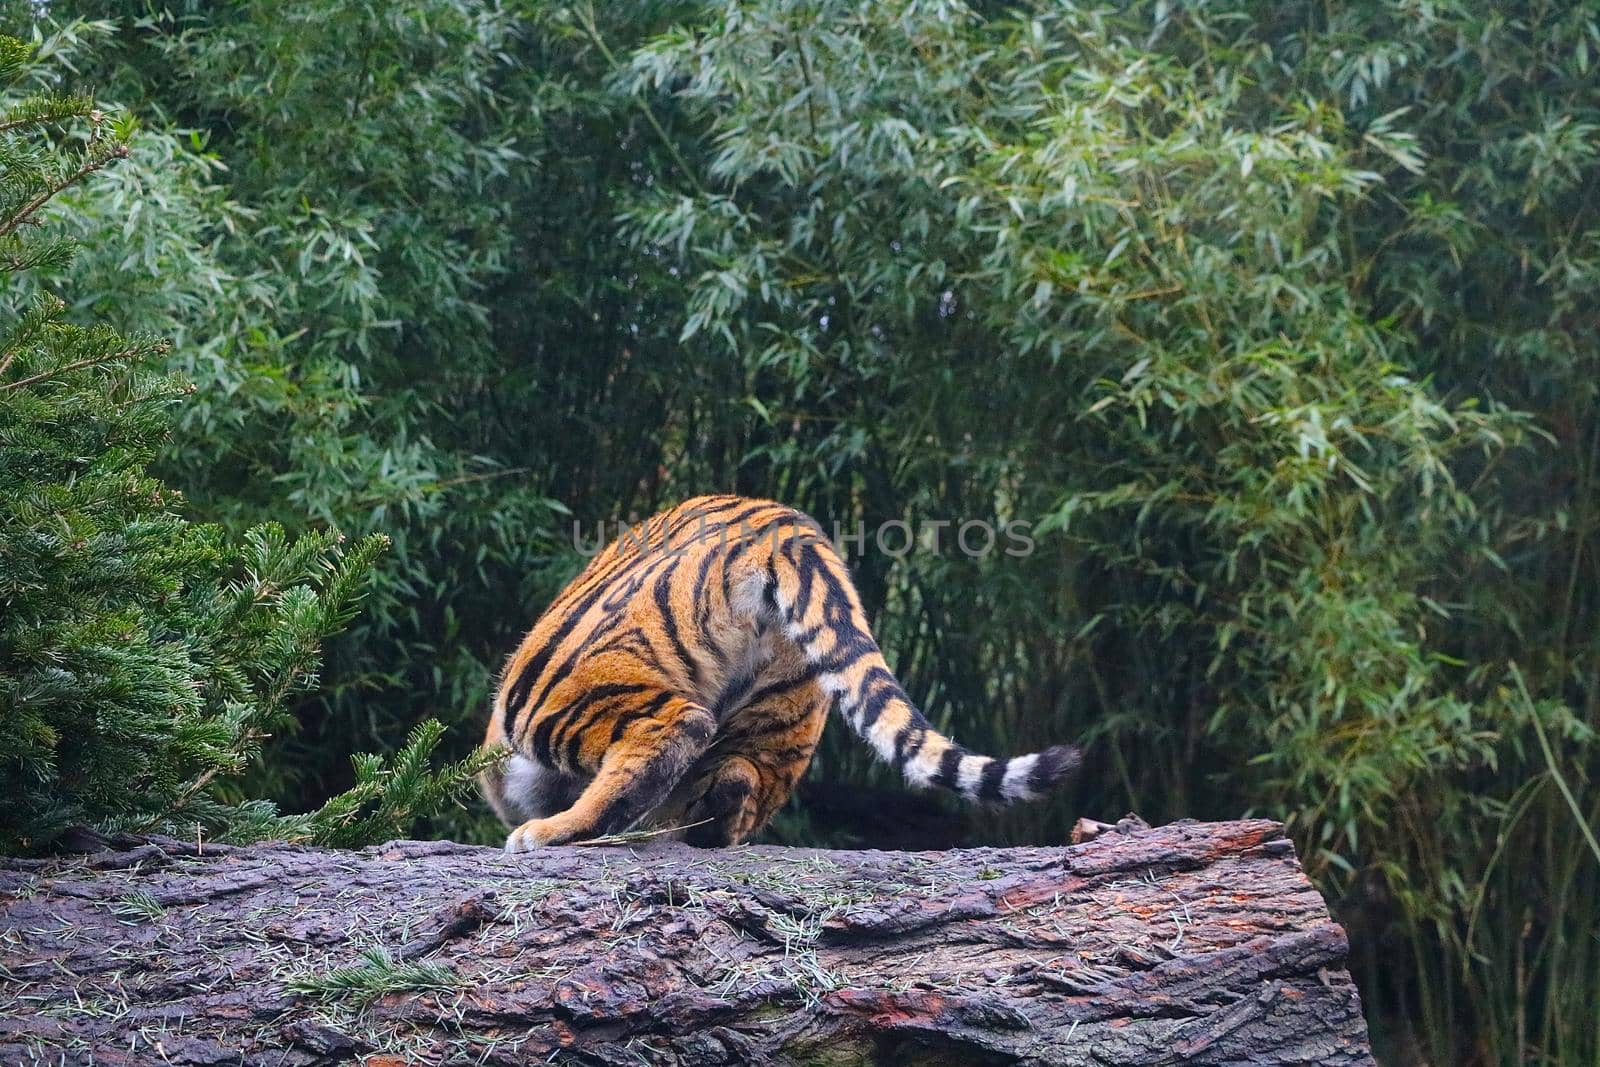 A tiger jumps off a log. Wildlife. Selective focus